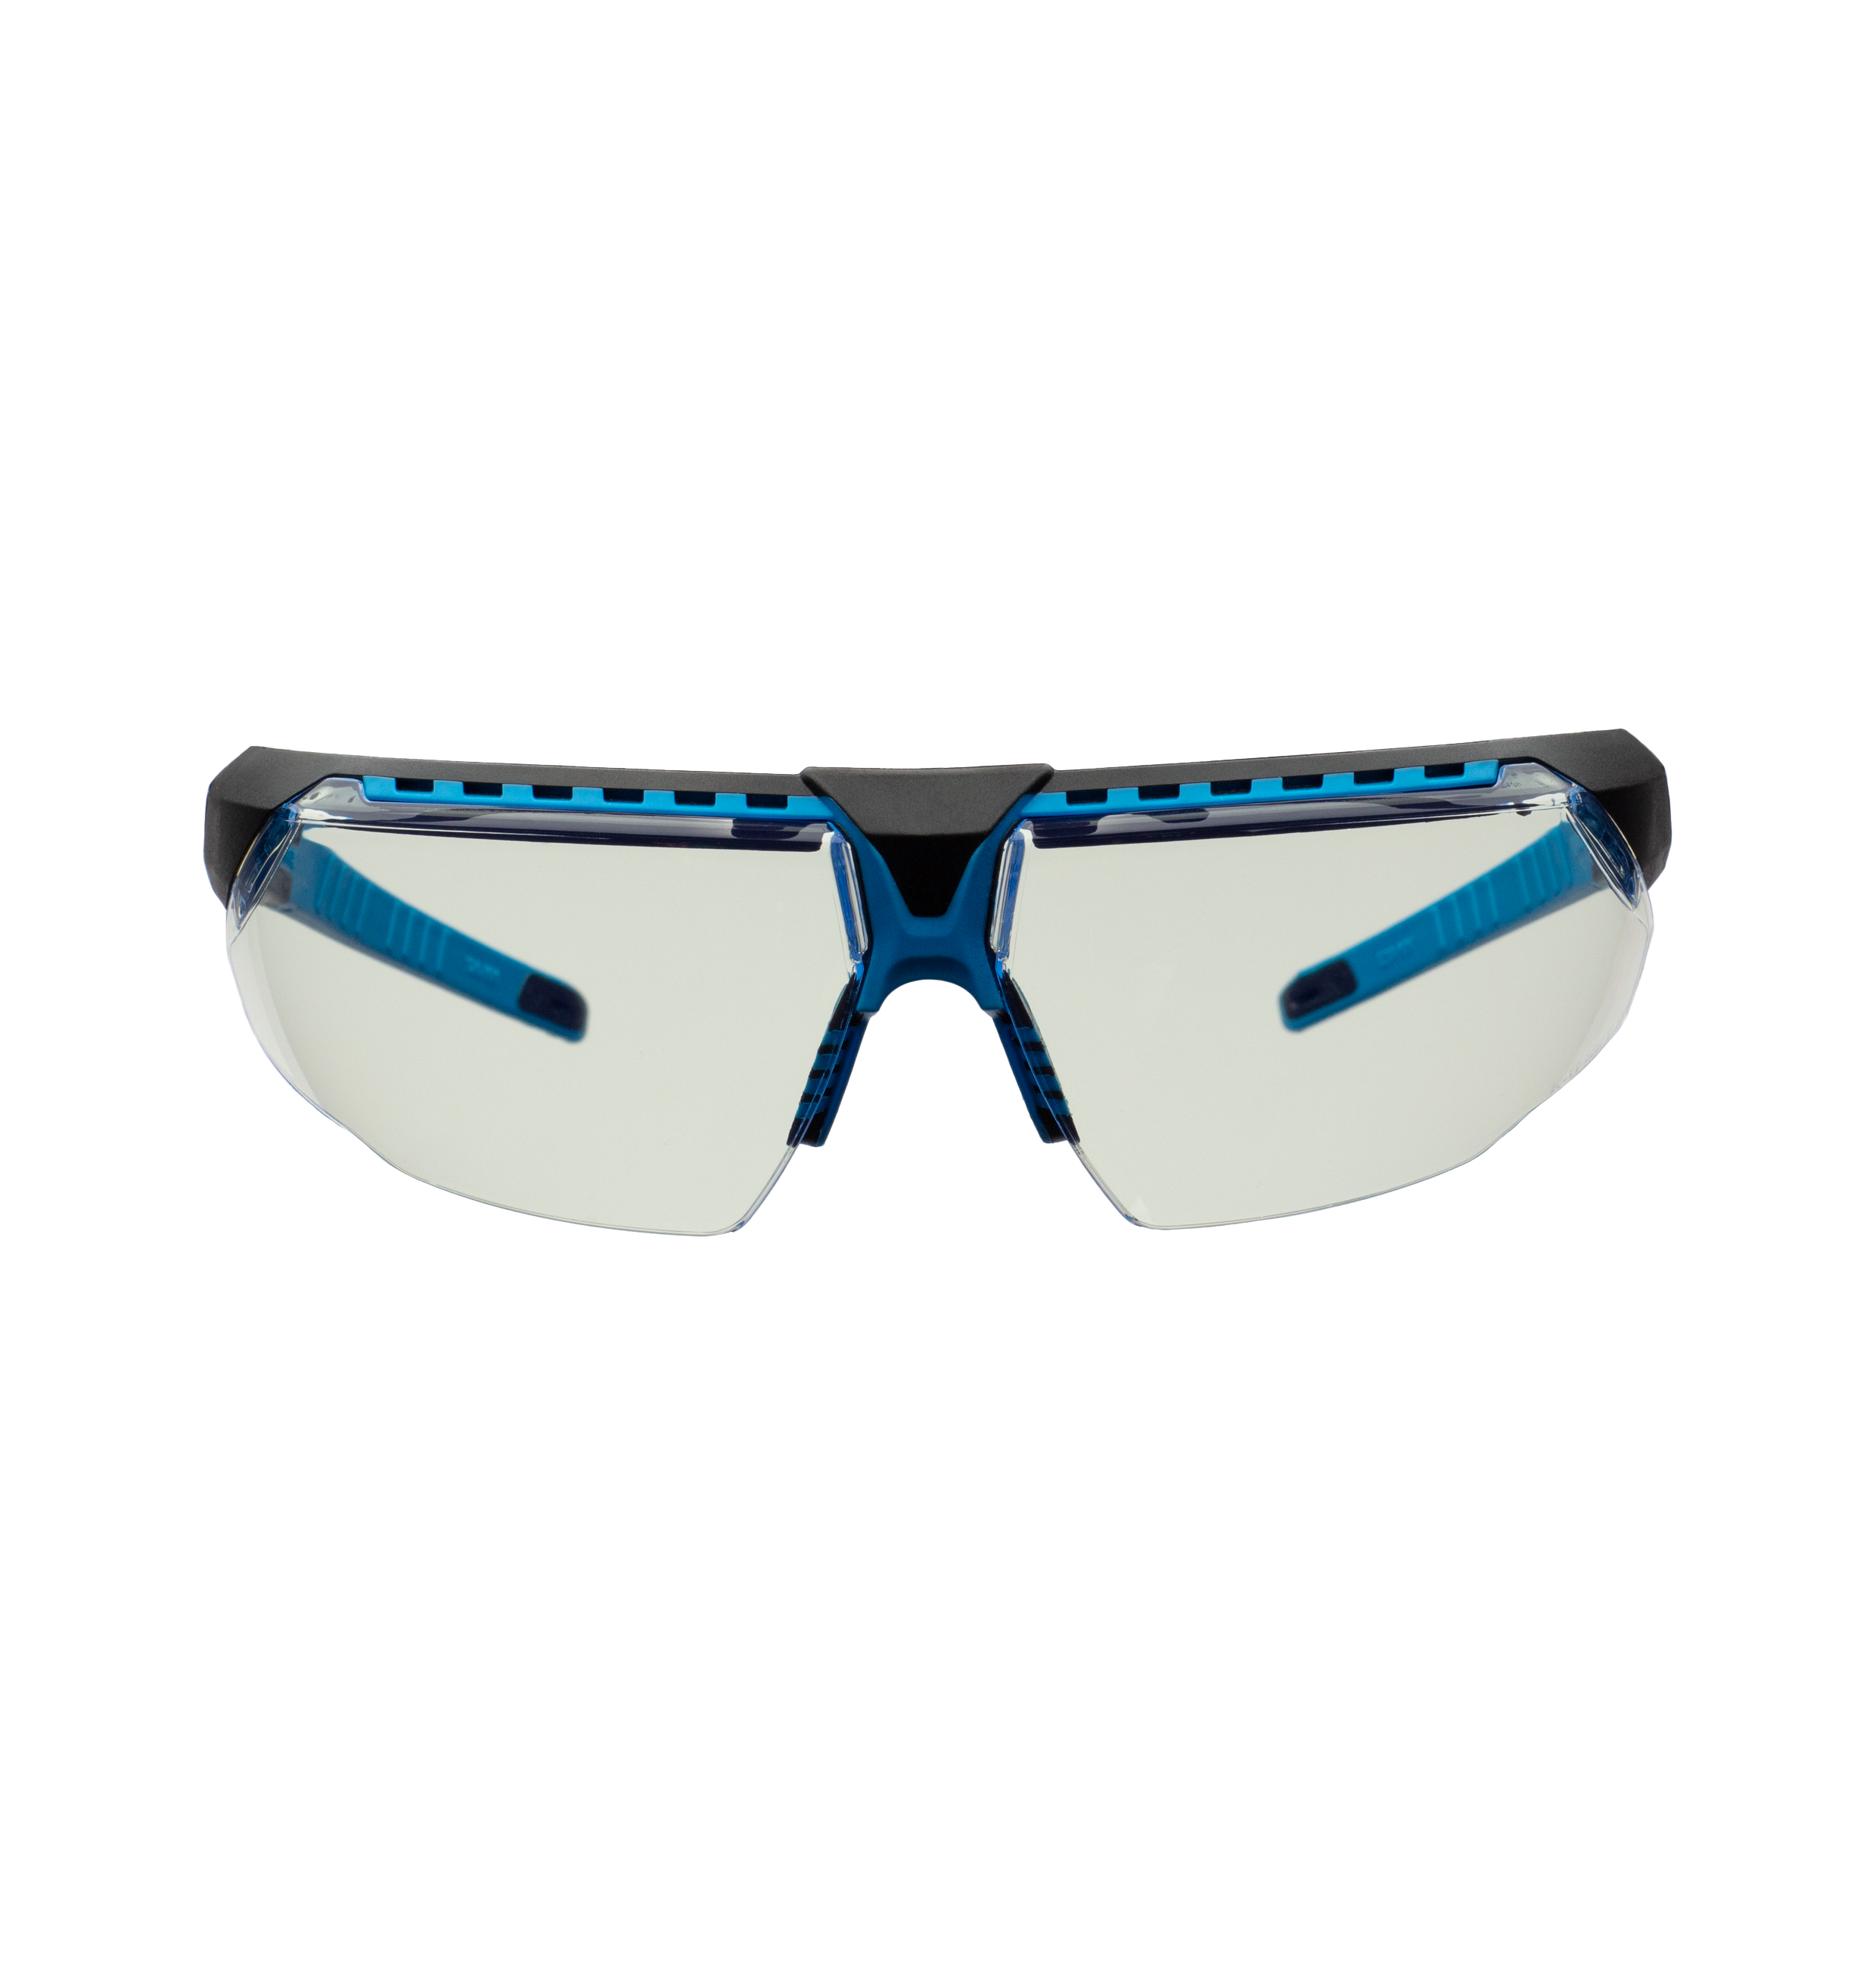 Avatar Safety Eyewear